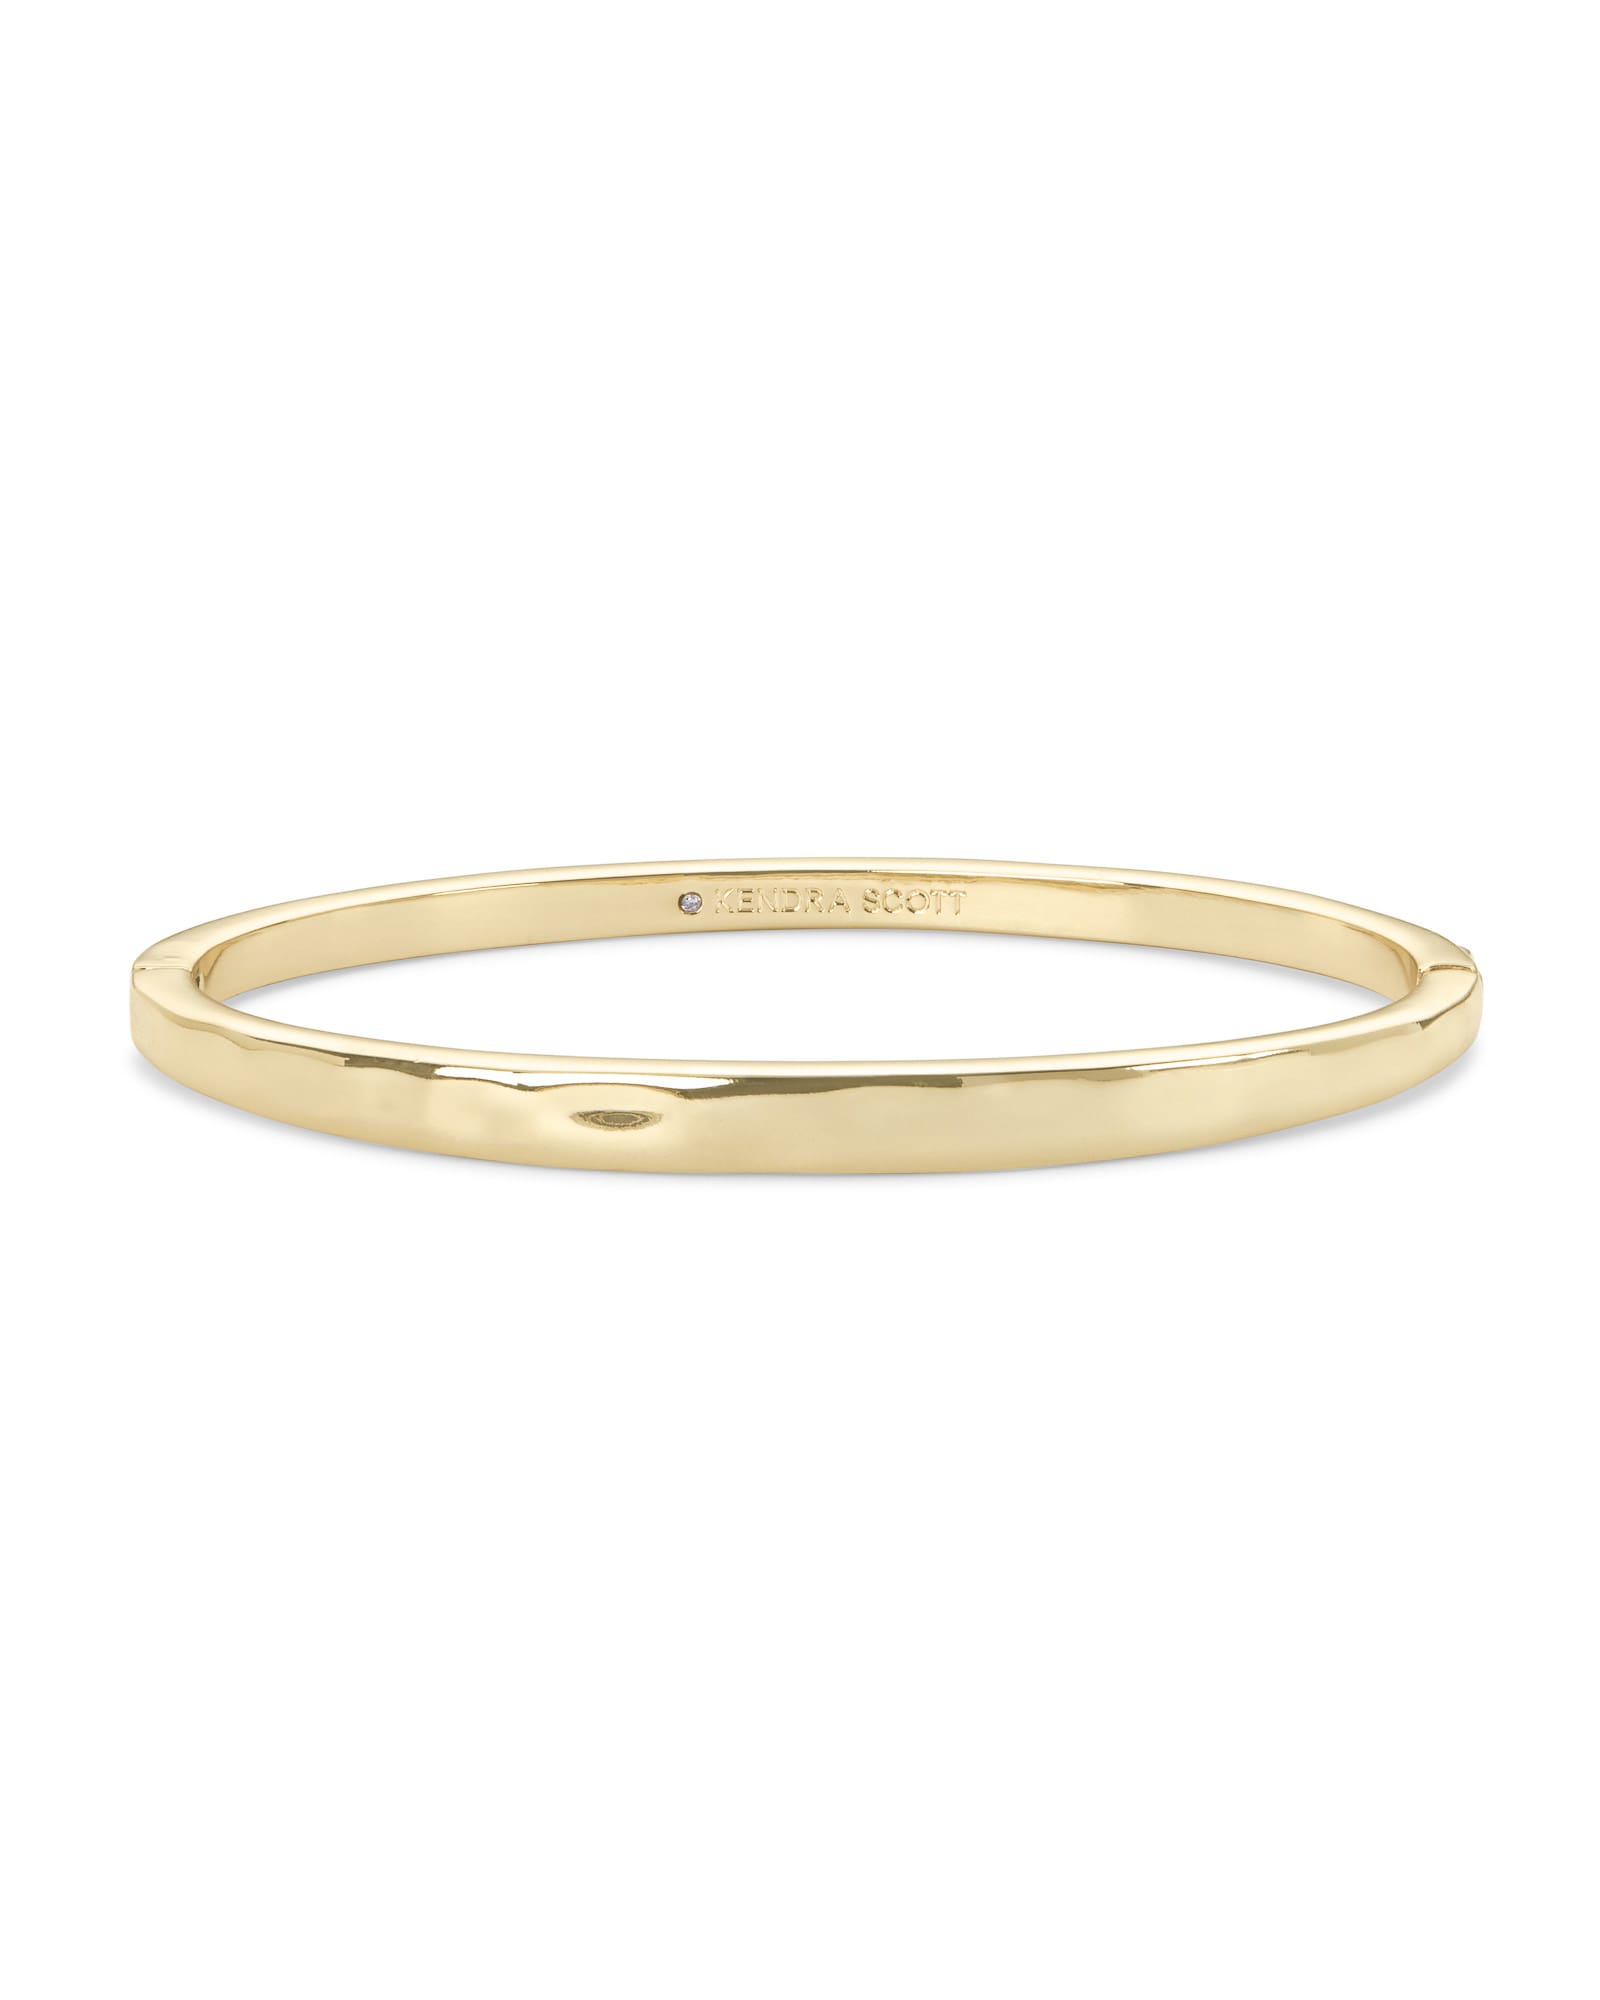 Kendra Scott Zorte Bangle Bracelet in Gold | Plated Brass/Metal